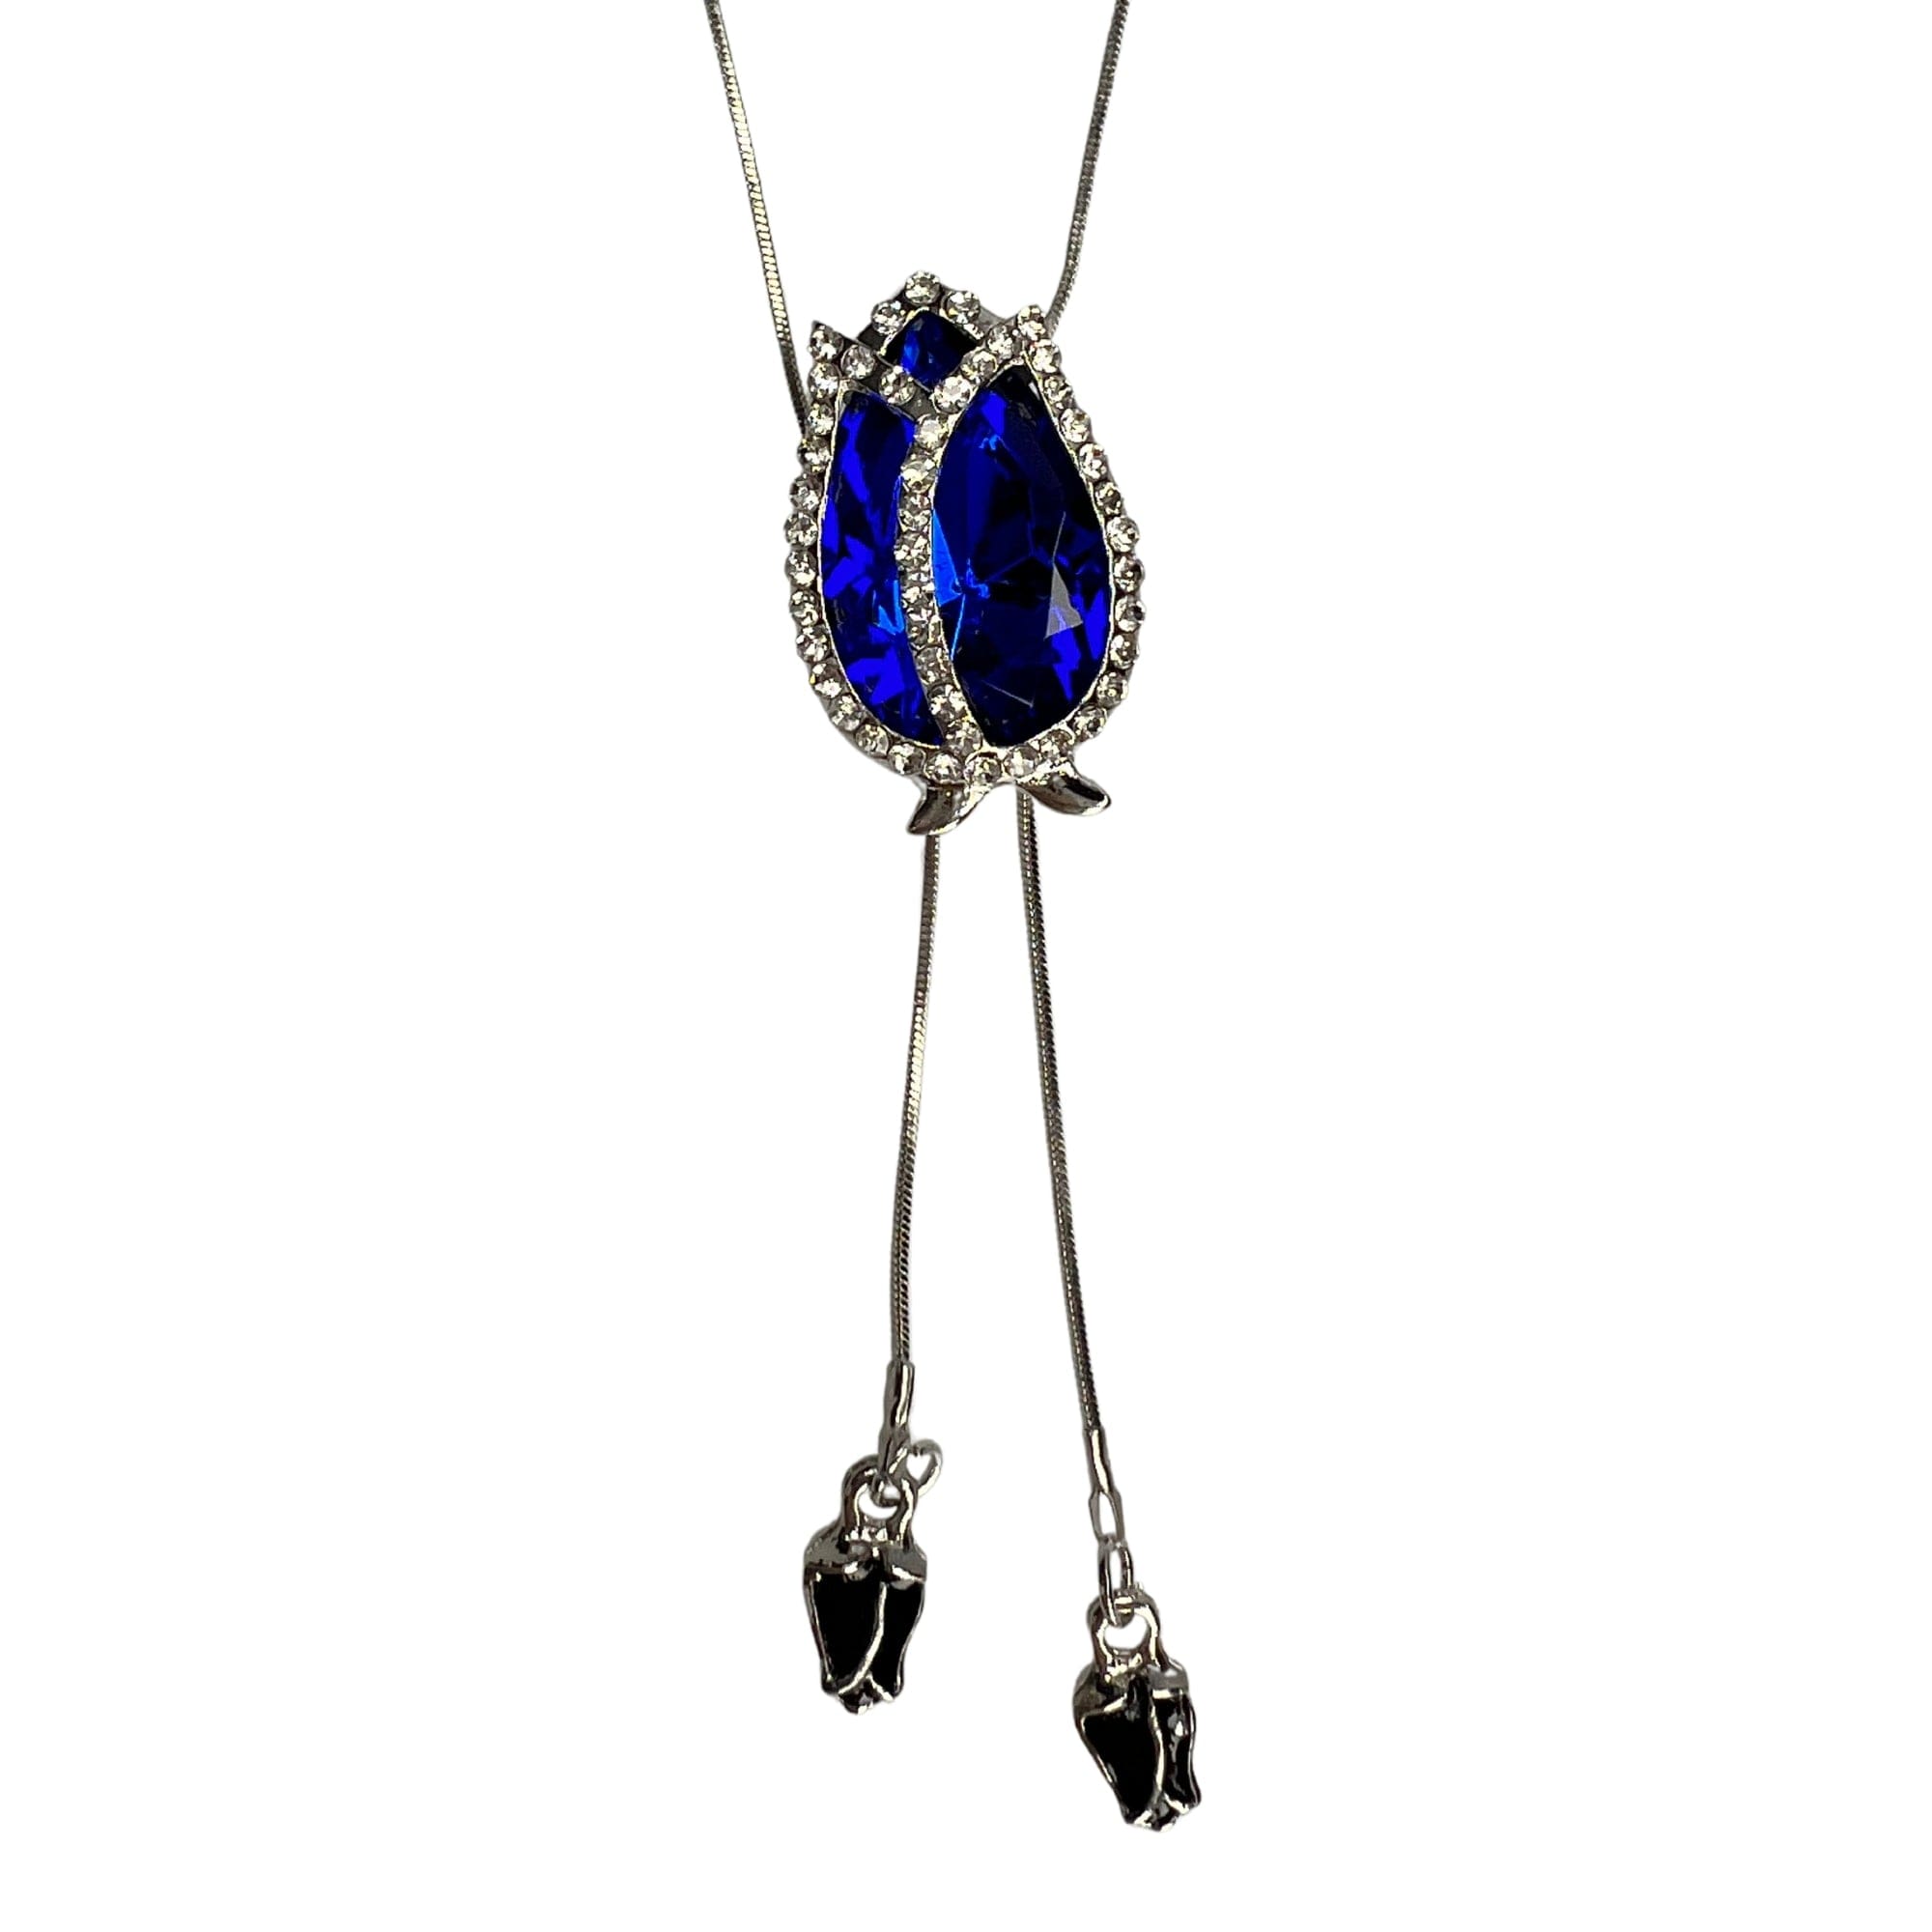 Carmen jewellery necklace - Sininen - Kaulakoru - Kaulakoru